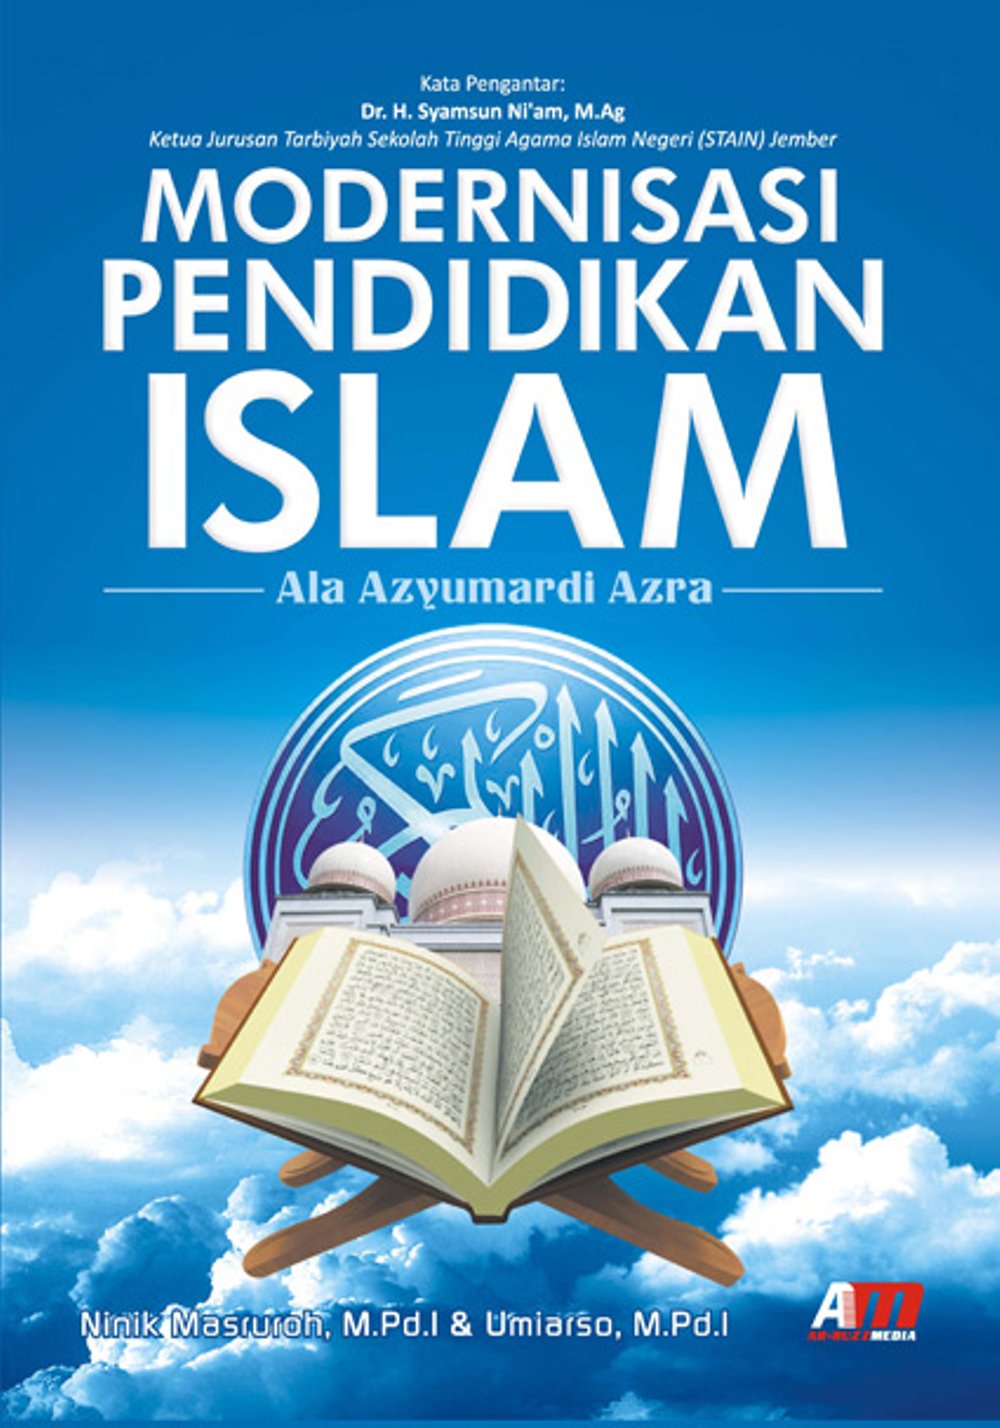 Modernisasi pendidikan islam ala Azyumardi Azra